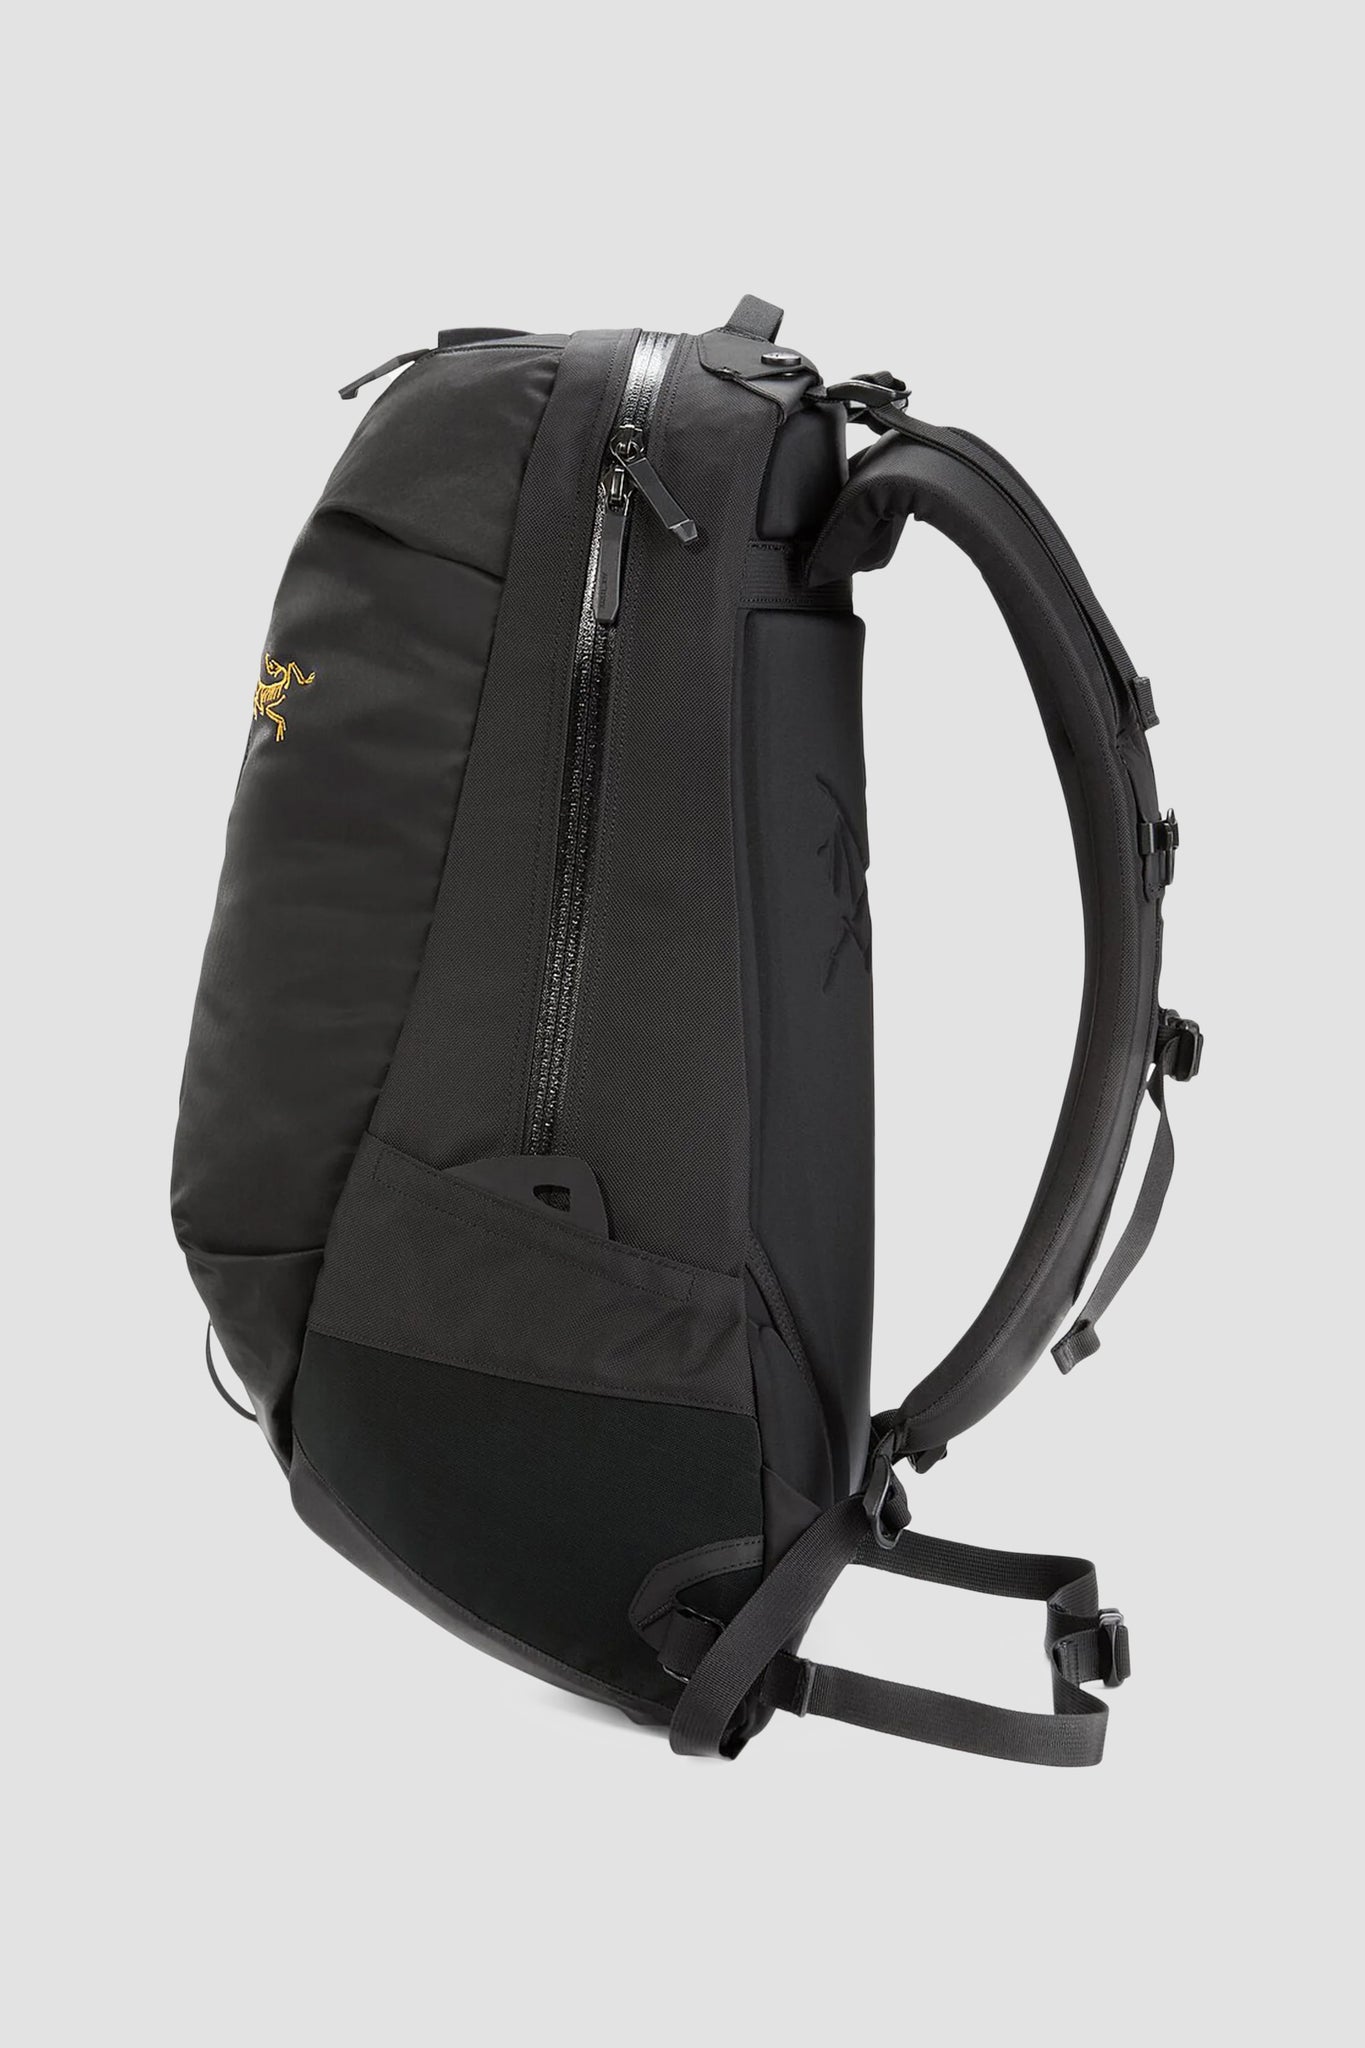 Arc'teryx Arro 22 Backpack in 24K Black